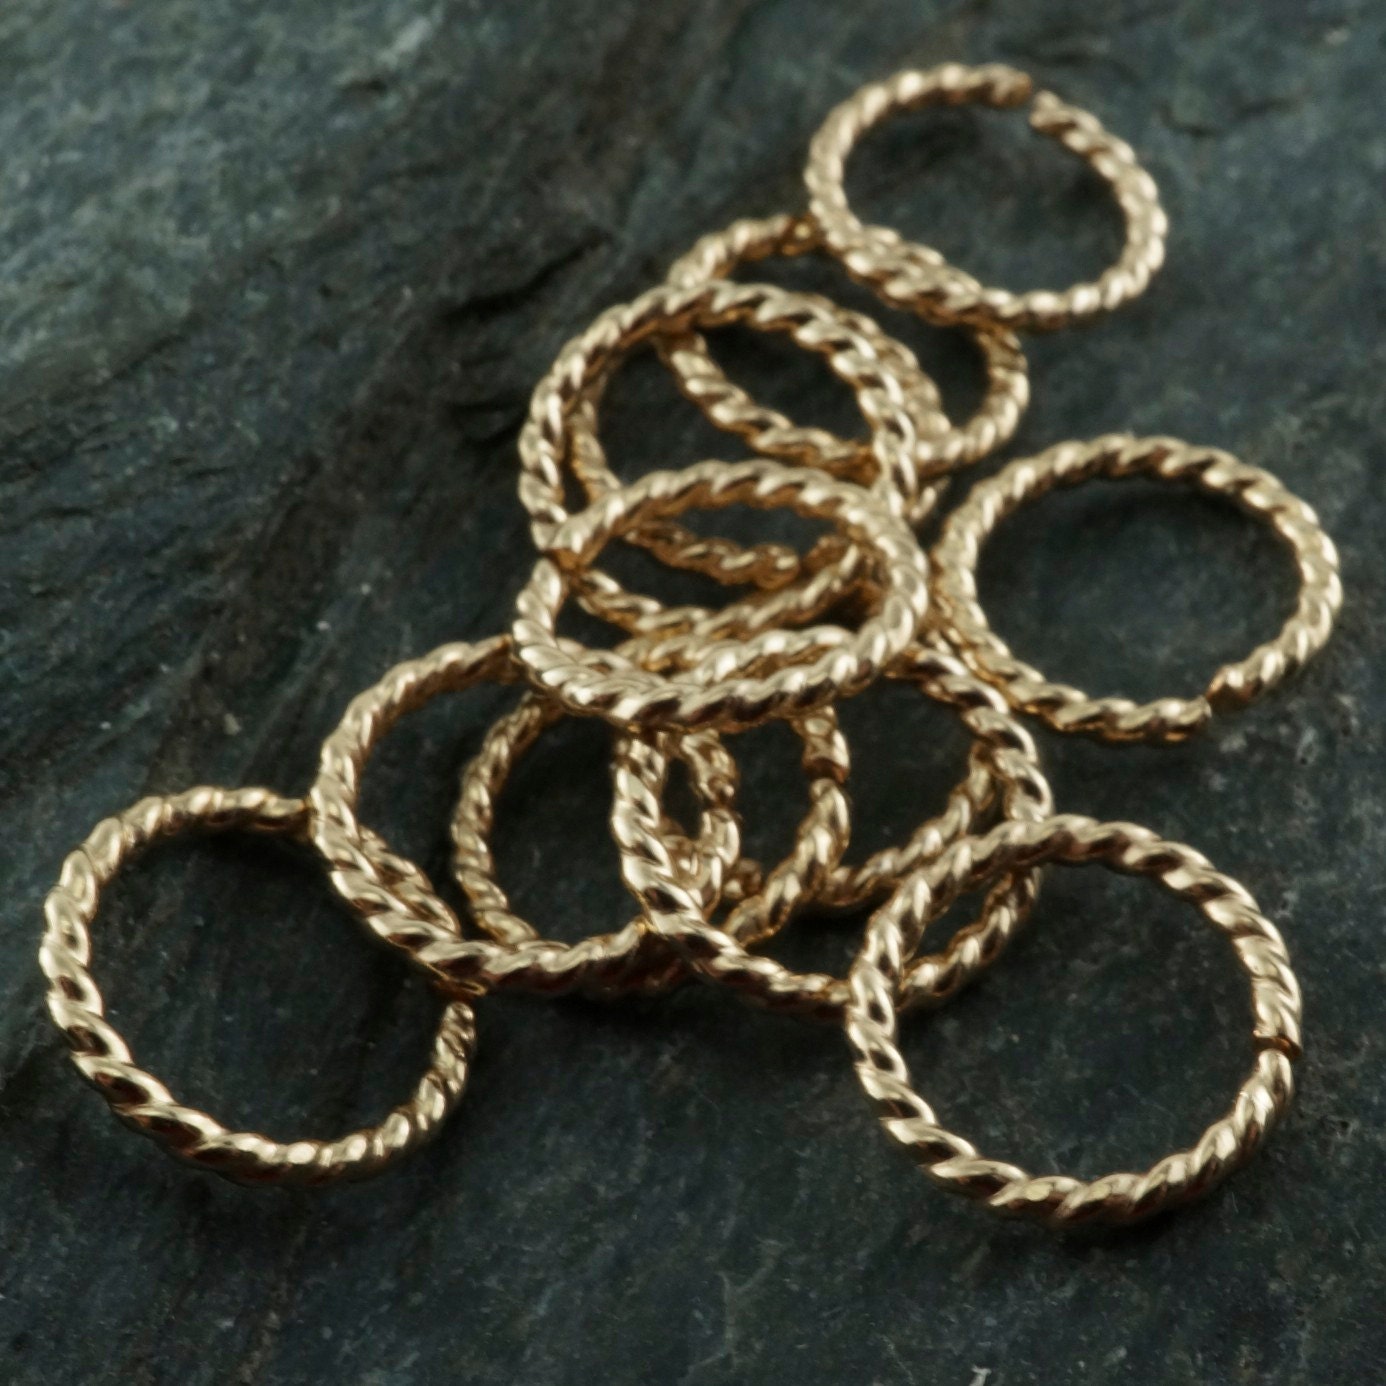 Septum ring - 16g - nose ring - septum hoop - nose jewelry - hammered gold  - cartilage - rose gold - gold - argentium No.00503